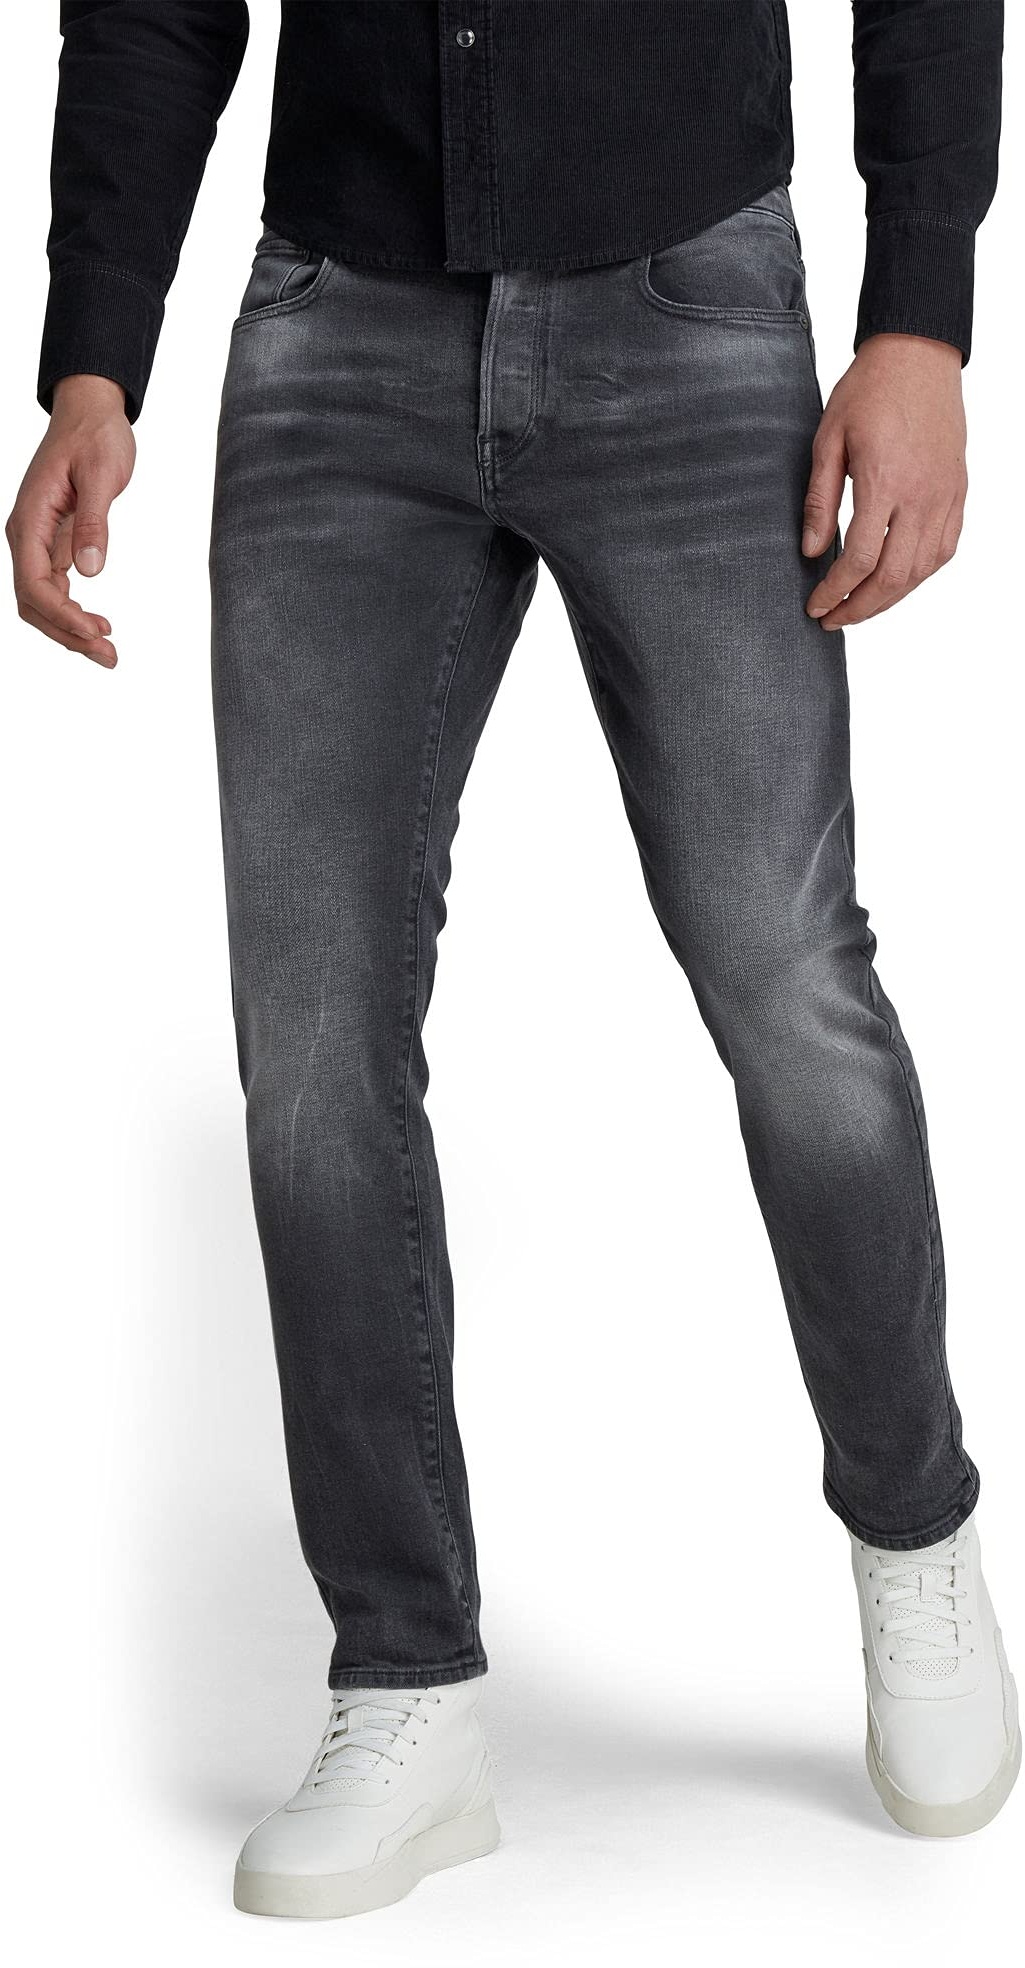 G-STAR RAW Herren 3301 Slim Jeans, Schwarz (antic charcoal 51001-B479-A800), 31W / 30L